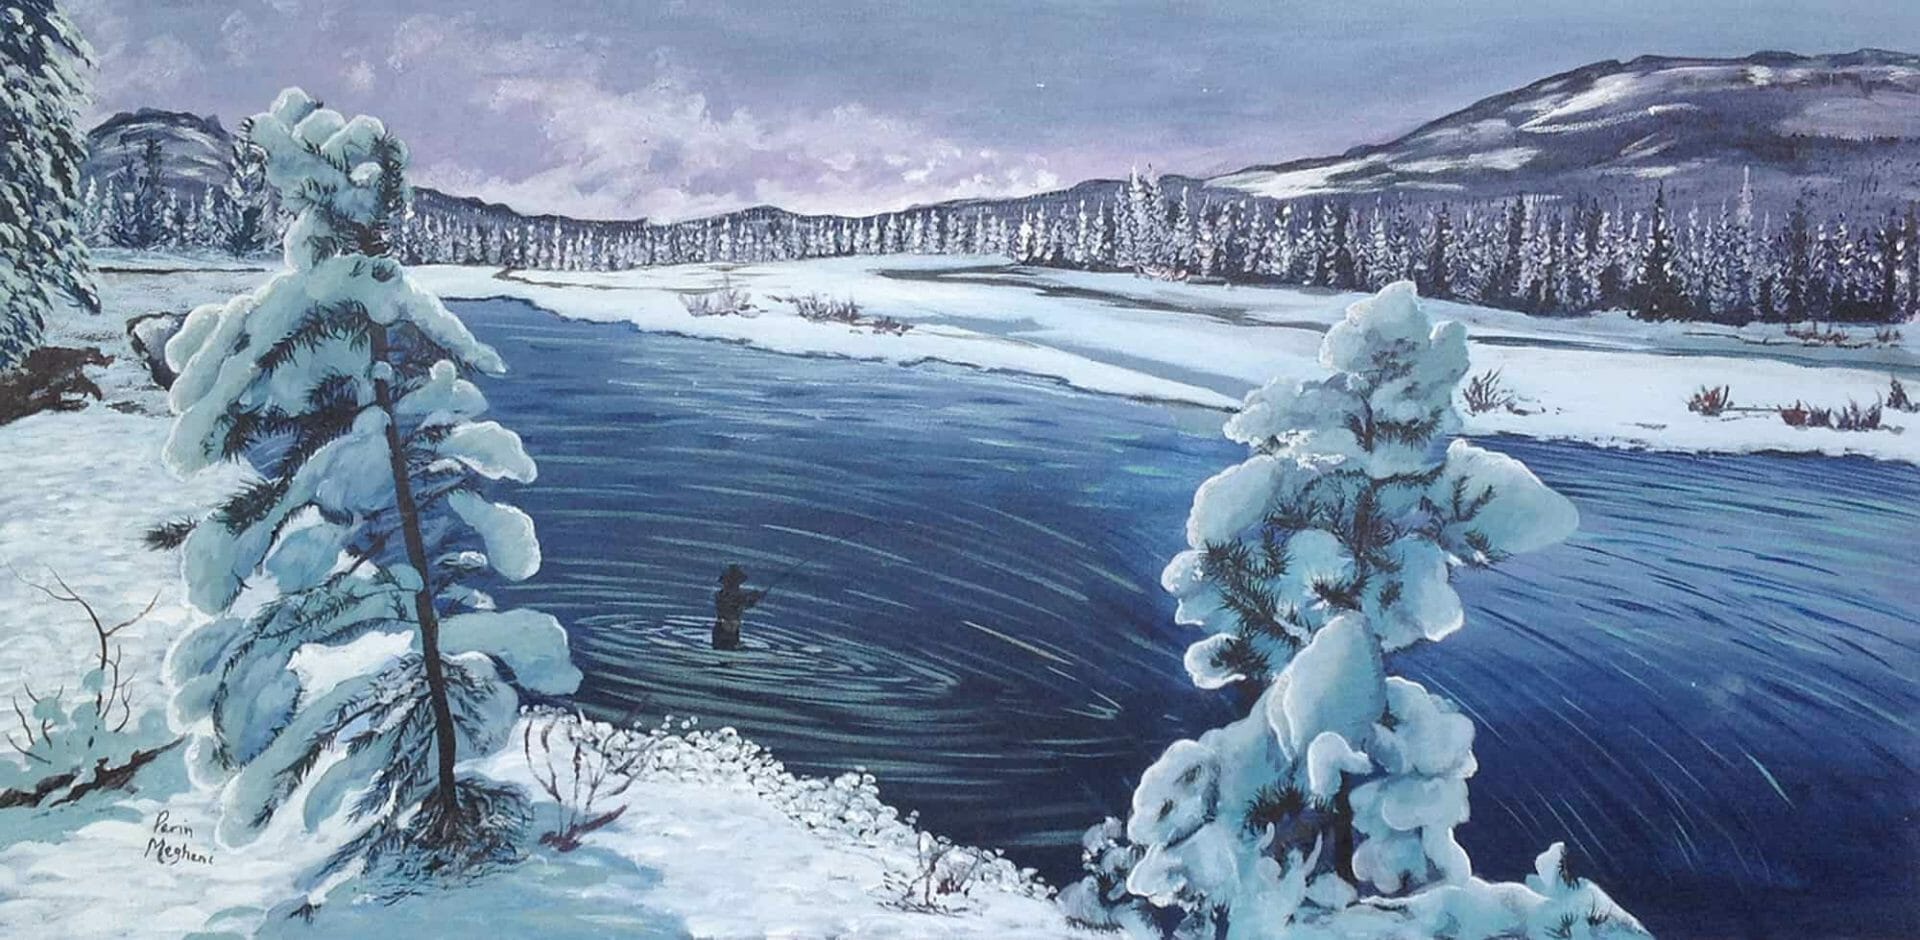 Lone Fisherman - Canadian Original Artwork For Sale by Parin Meghani - Calgary, AB Local Artist - Figure